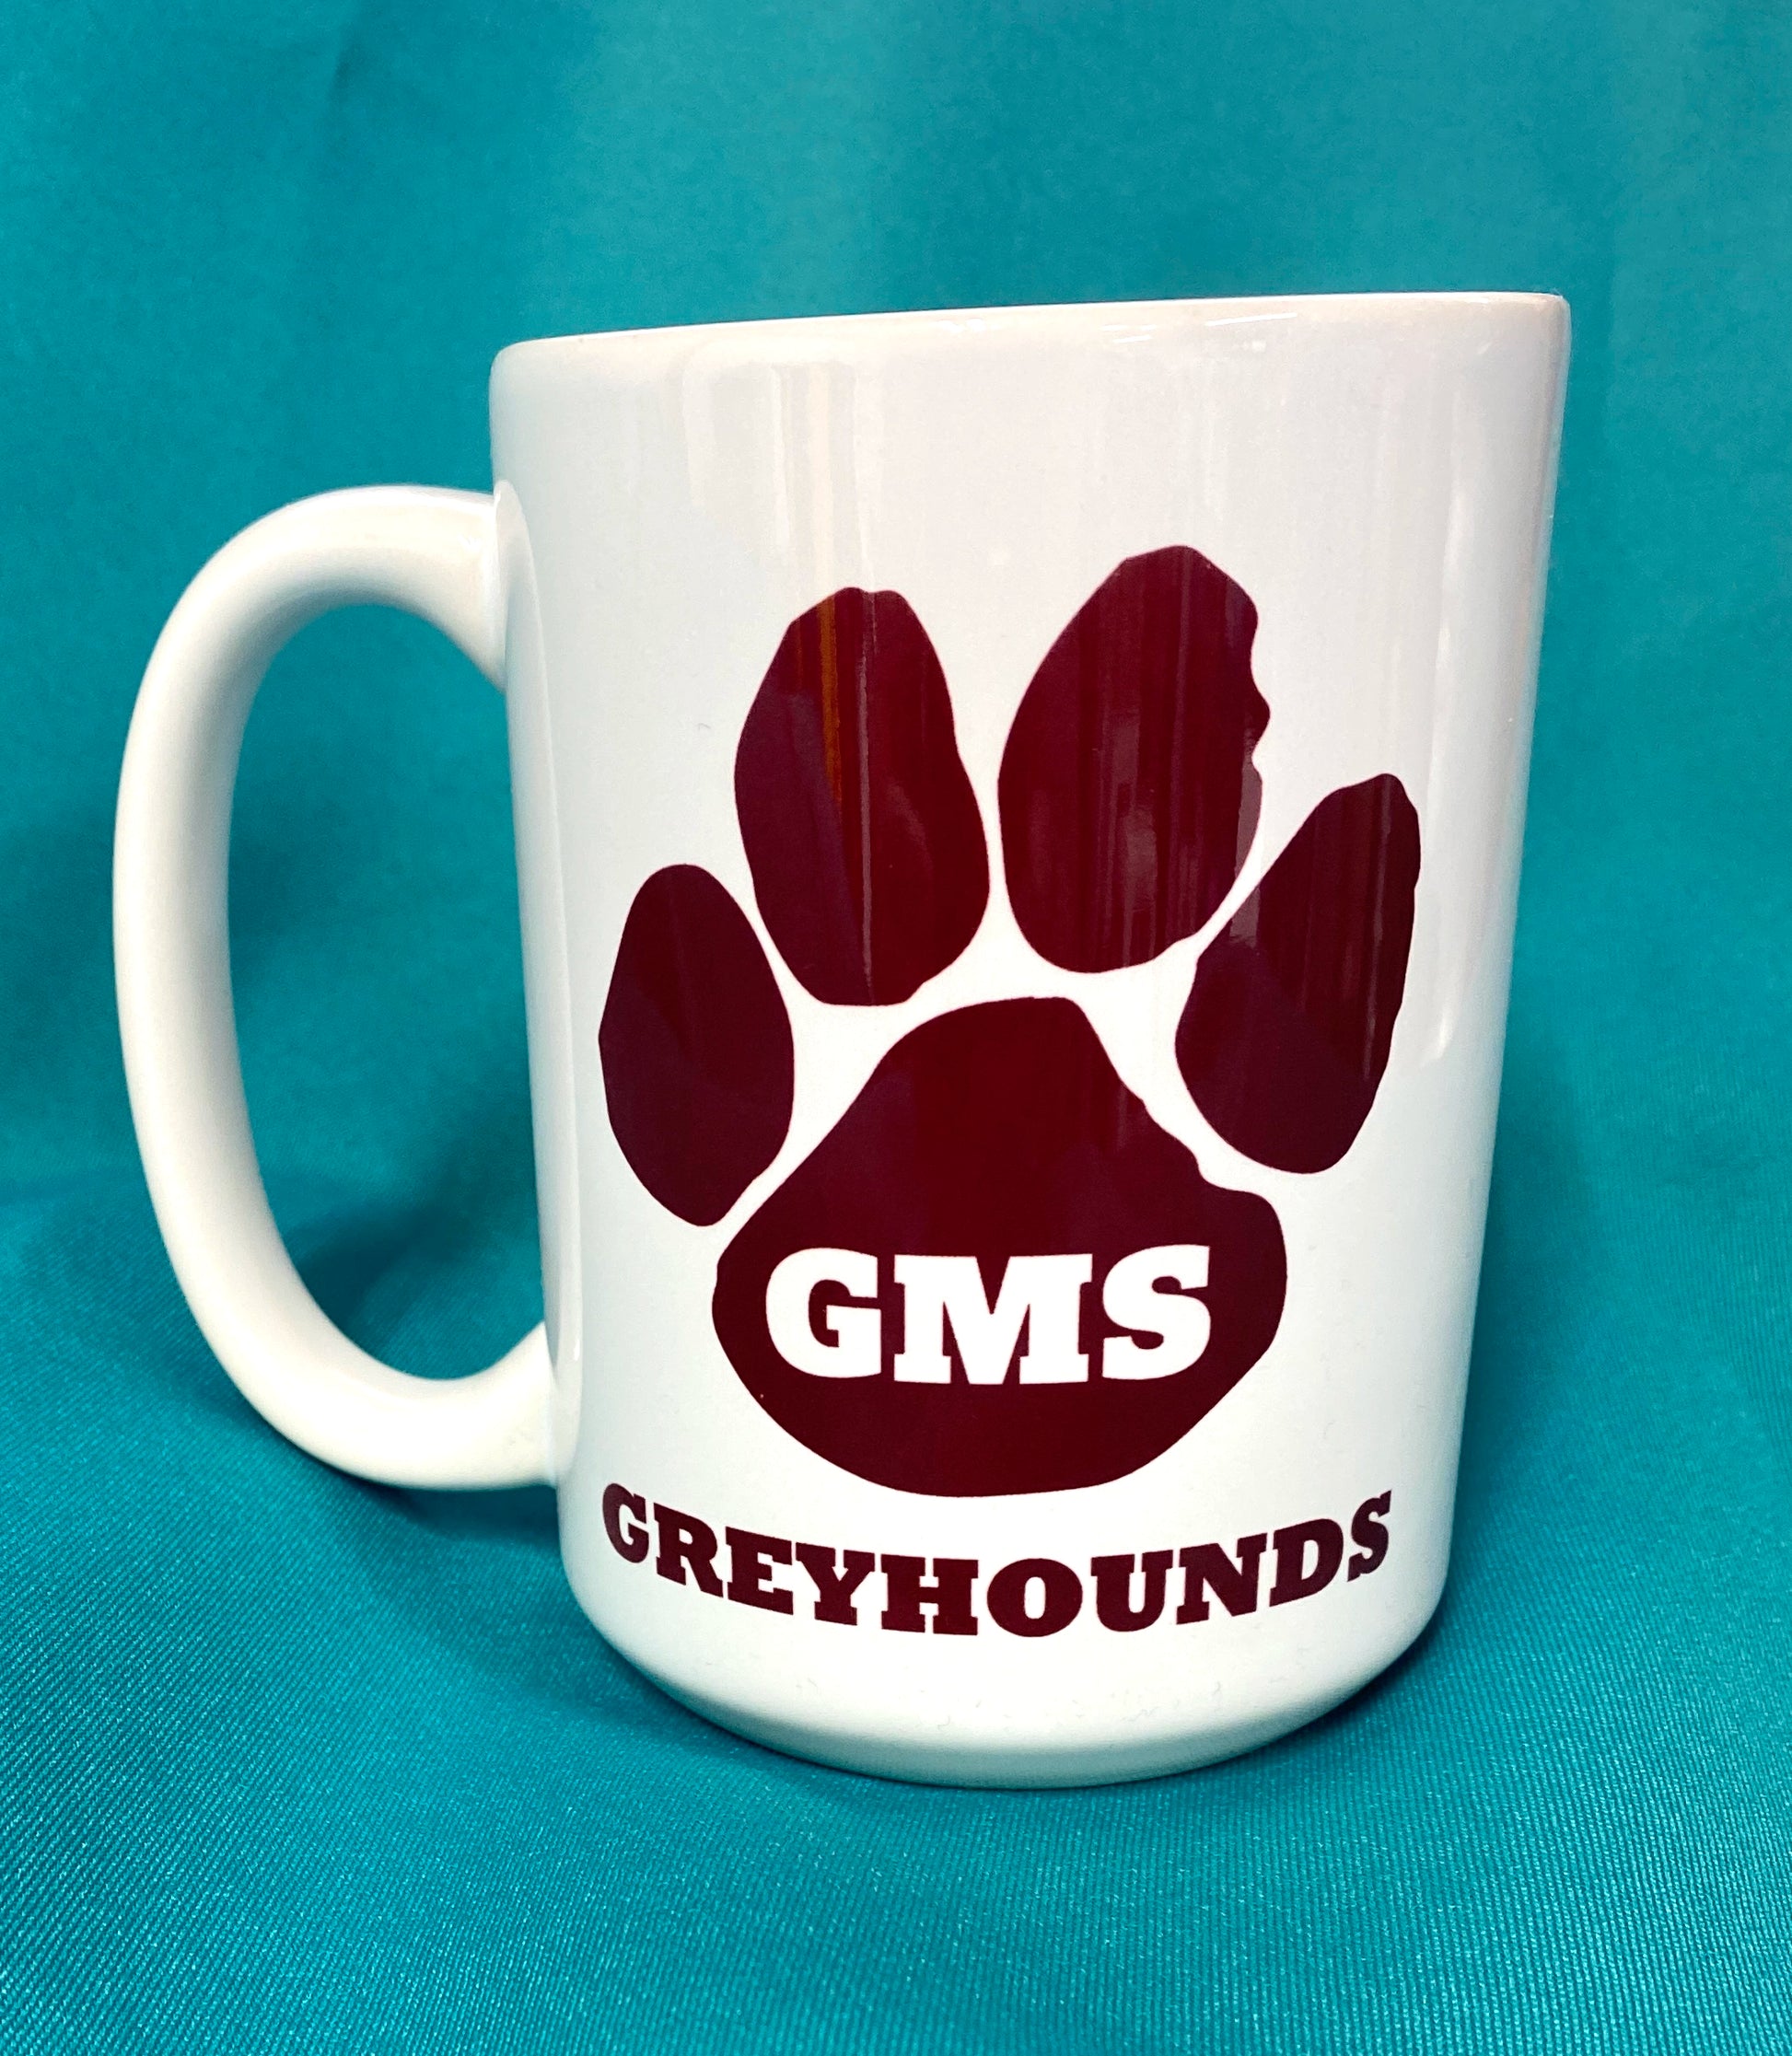 15oz ceramic GMS coffee mug